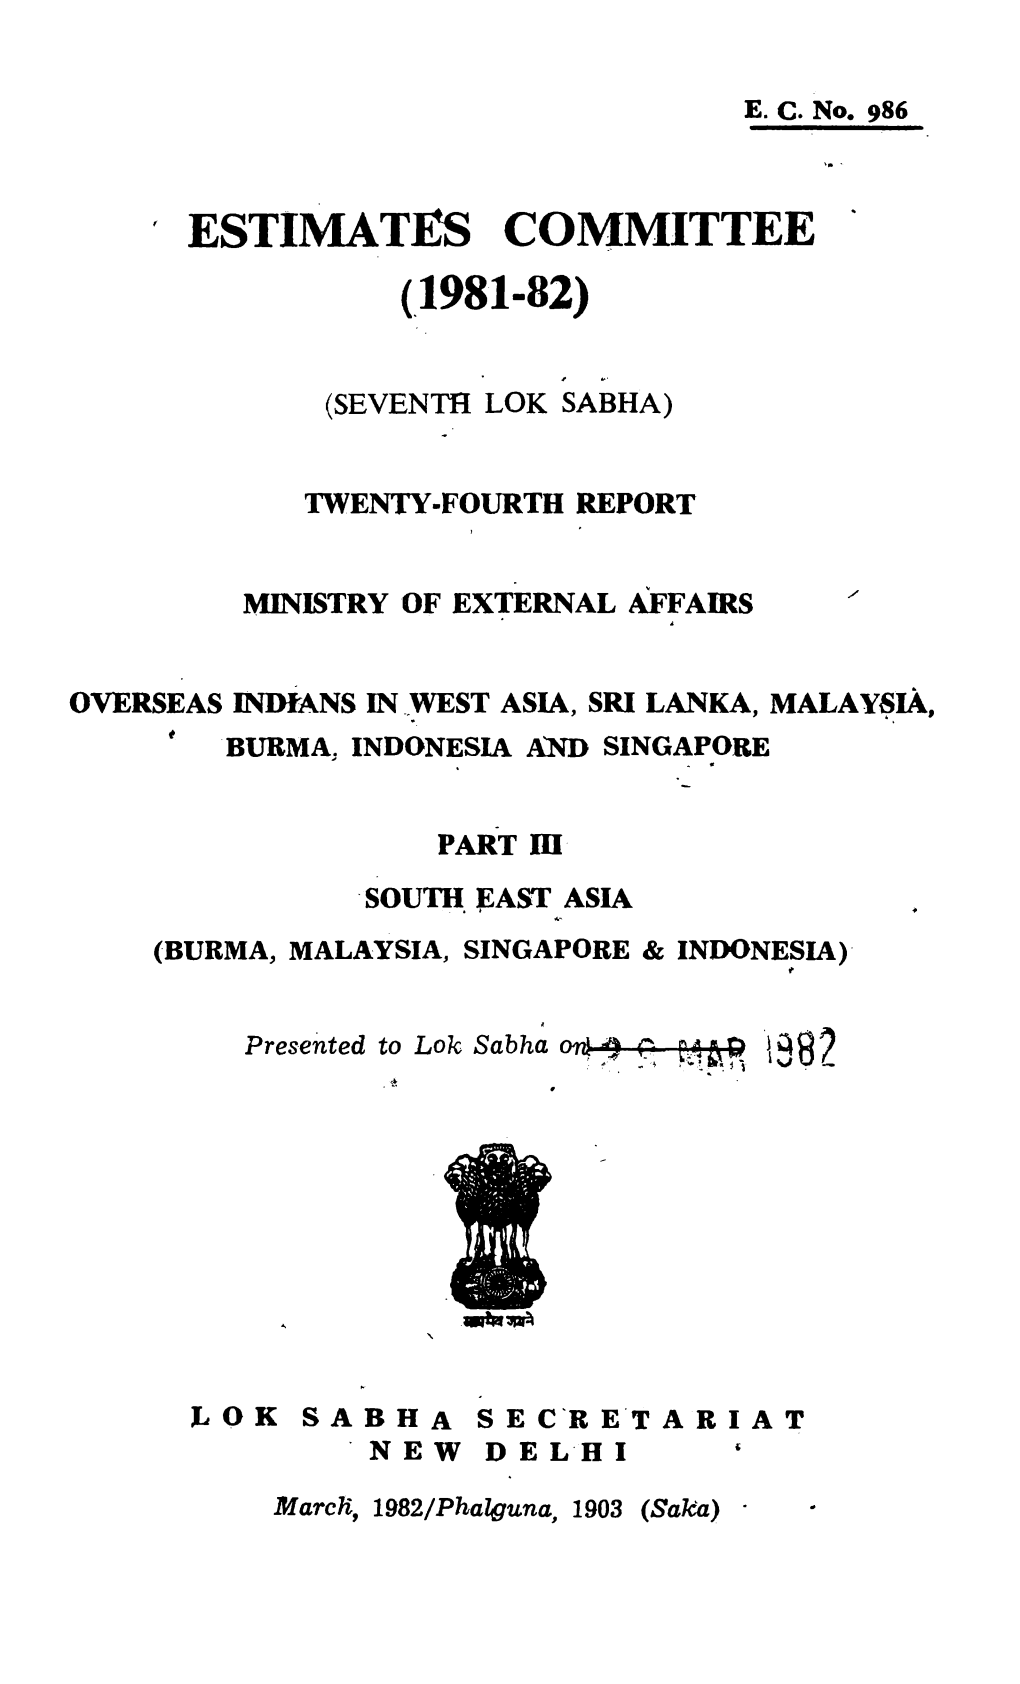 Estimates Committee (1981-82)